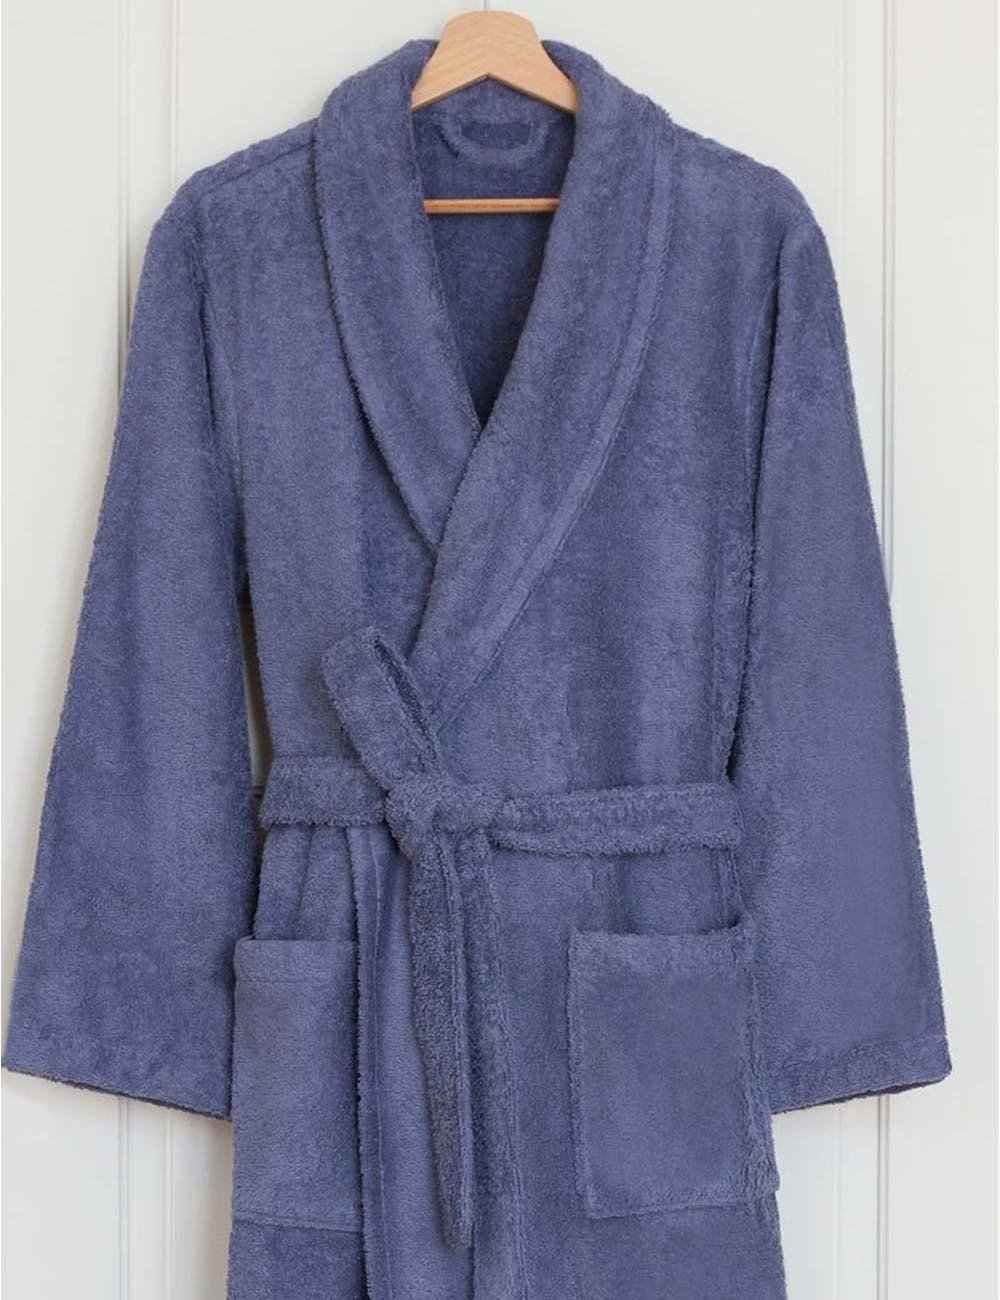 Terry bathrobe in 100% cotton, 400 gr. - 5